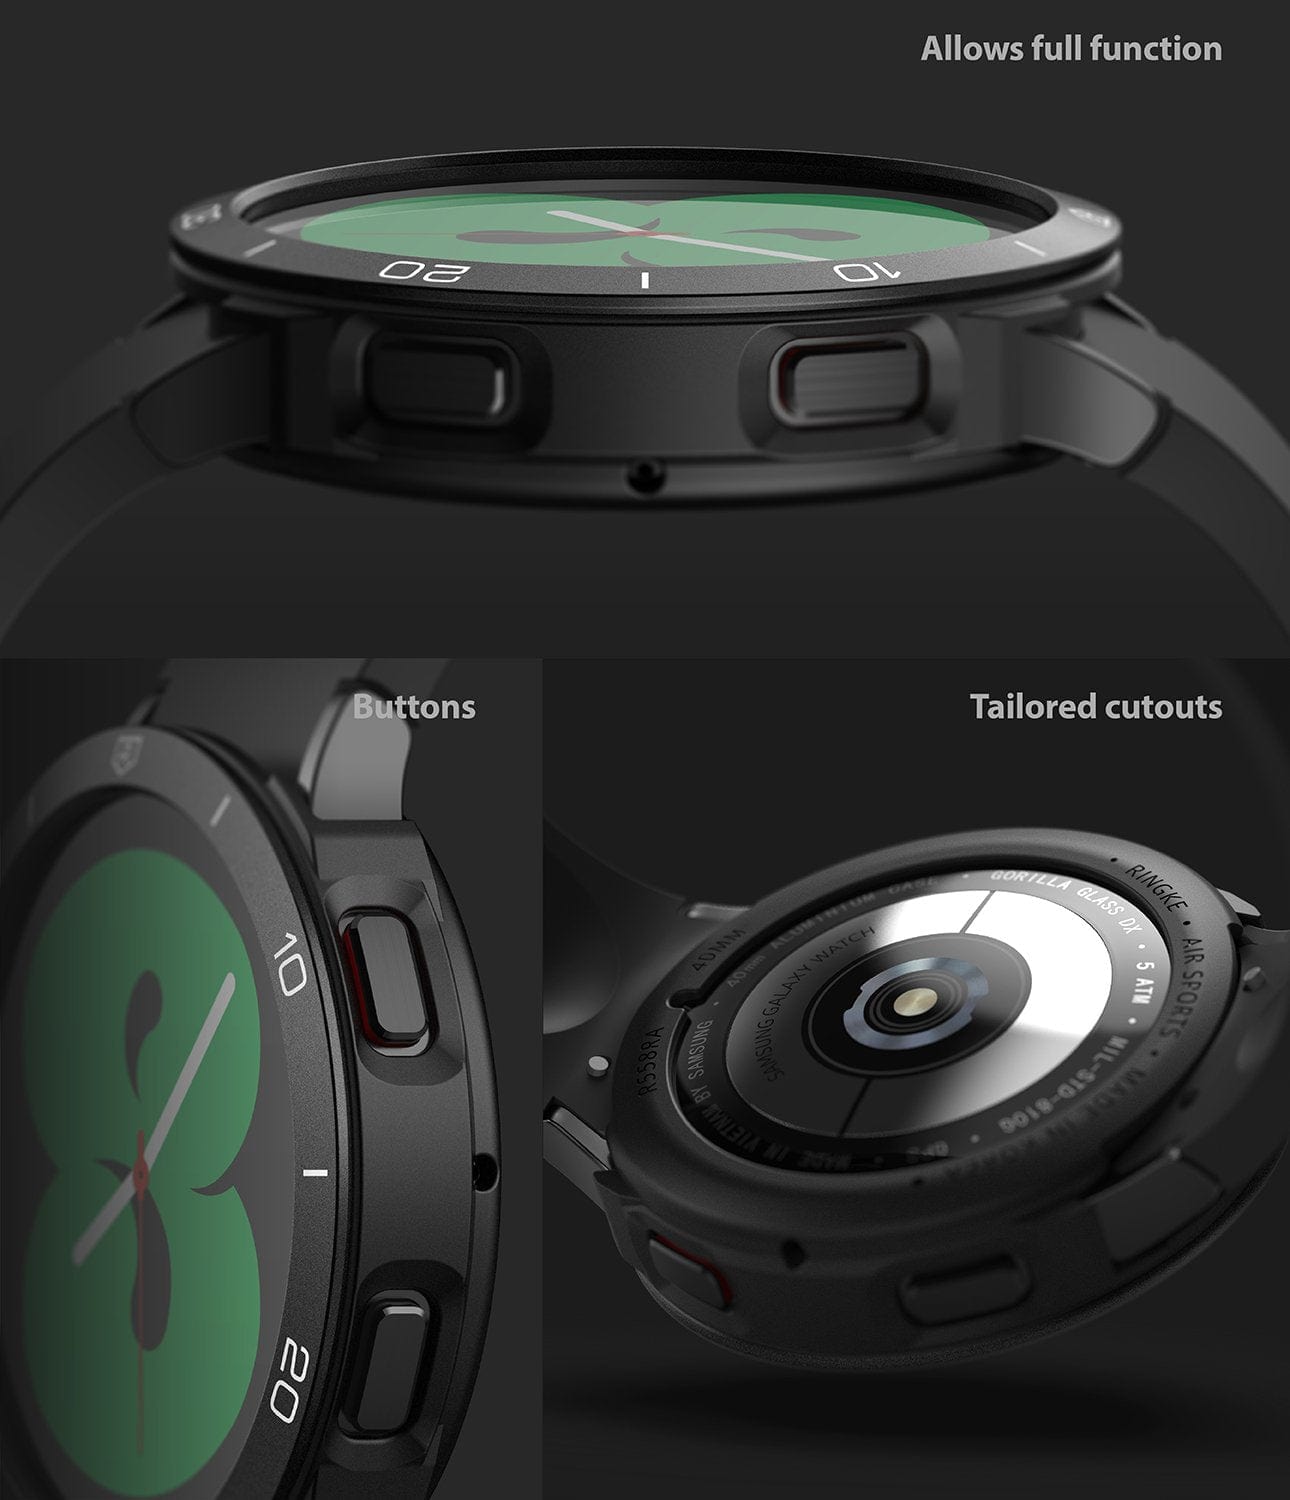 Galaxy Watch 4 40mm Air Sports Black + Black Bezel Styling By Ringke